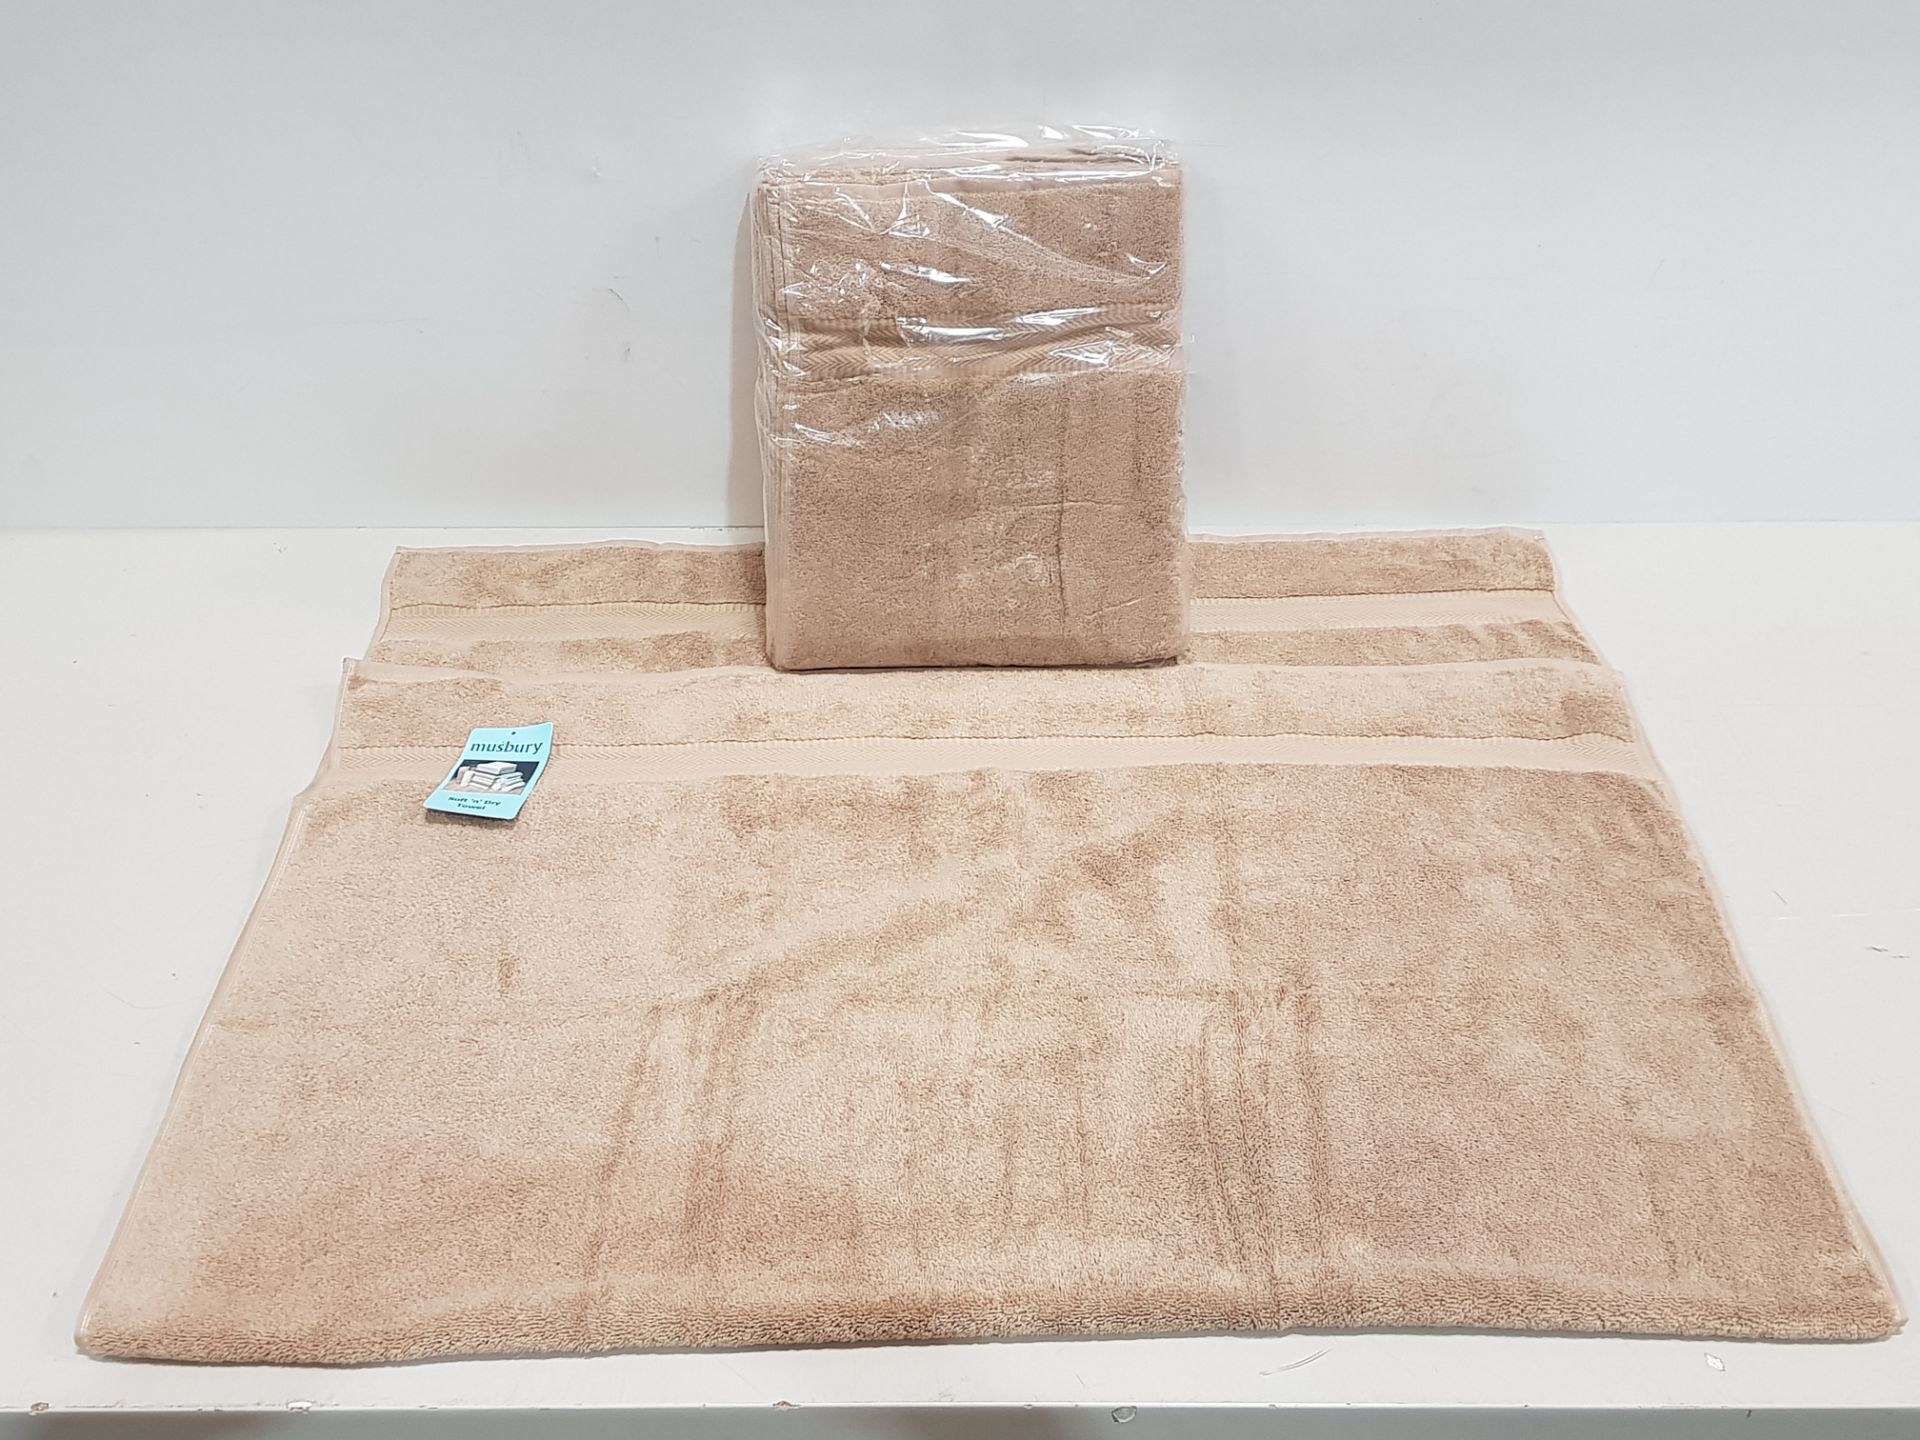 20 X BRAND NEW MUSBURY SOFT 'N' DRY BATH TOWELS IN MOCHA COLOUR (SIZE : 100 X 150 CM ) - IN 1 BOX